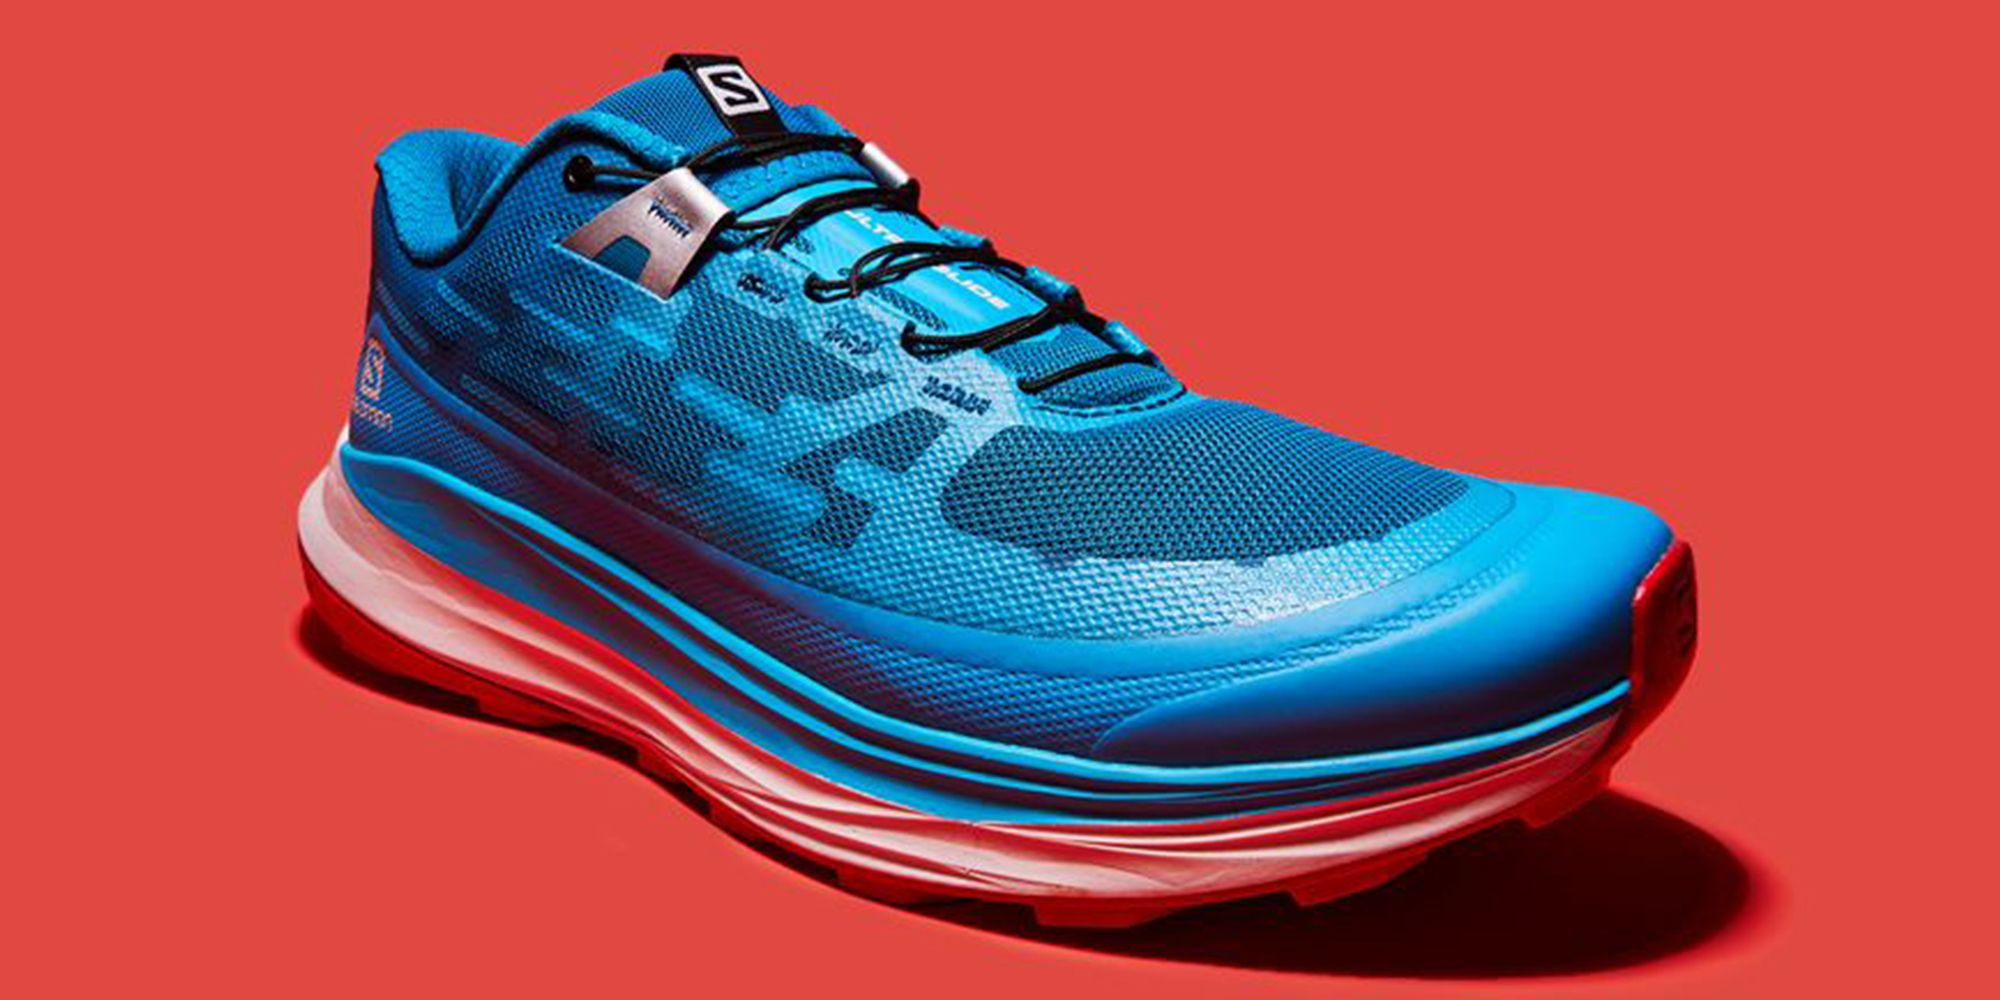 Salomon Ultra Glide Trail Running Shoes Review - The Trek